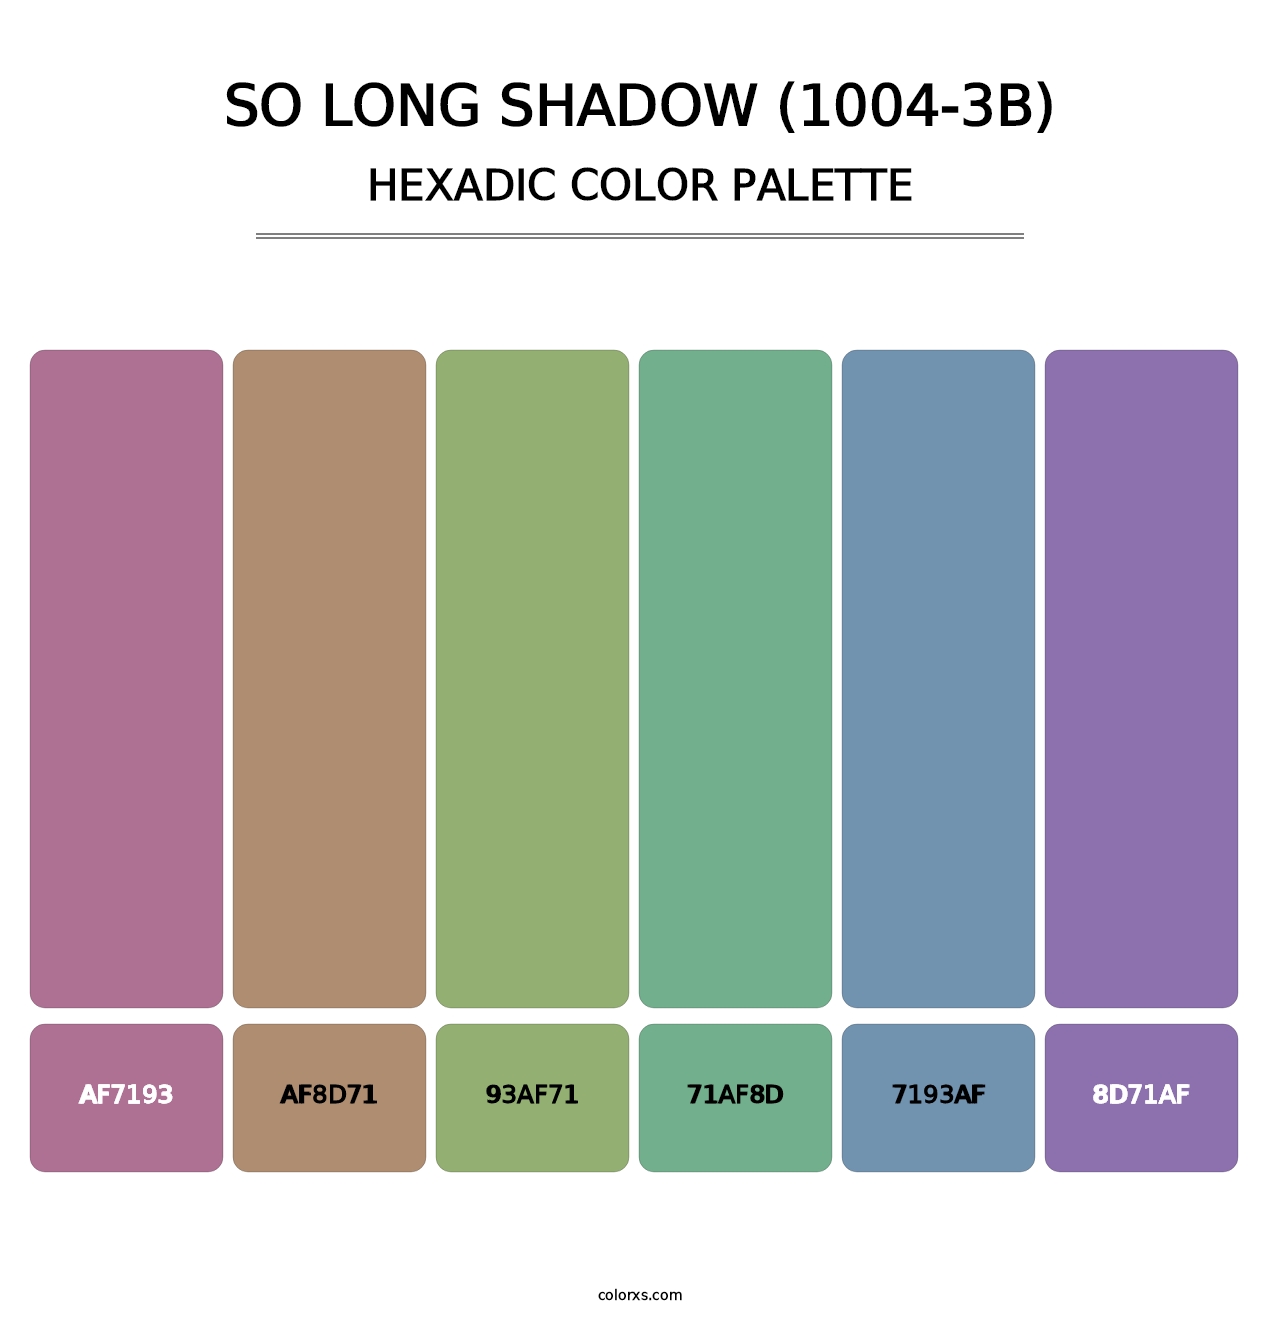 So Long Shadow (1004-3B) - Hexadic Color Palette